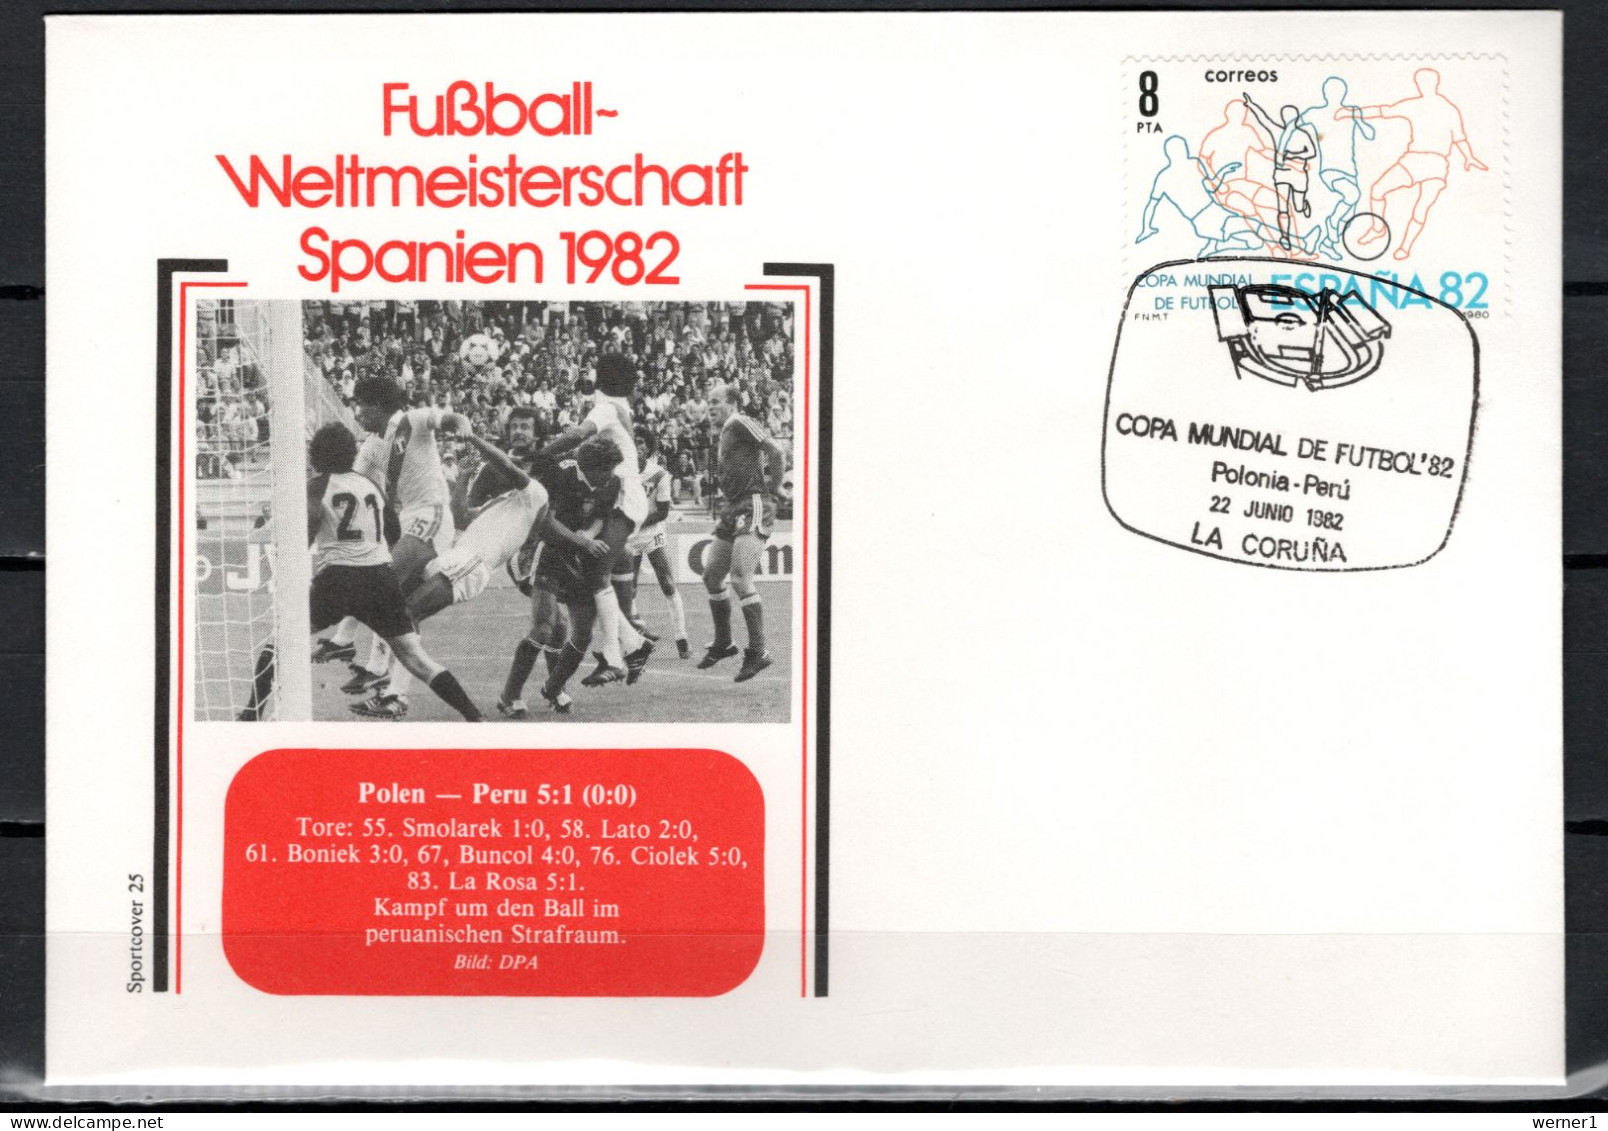 Spain 1982 Football Soccer World Cup Commemorative Cover Match Poland - Peru 5:1 - 1982 – Spain